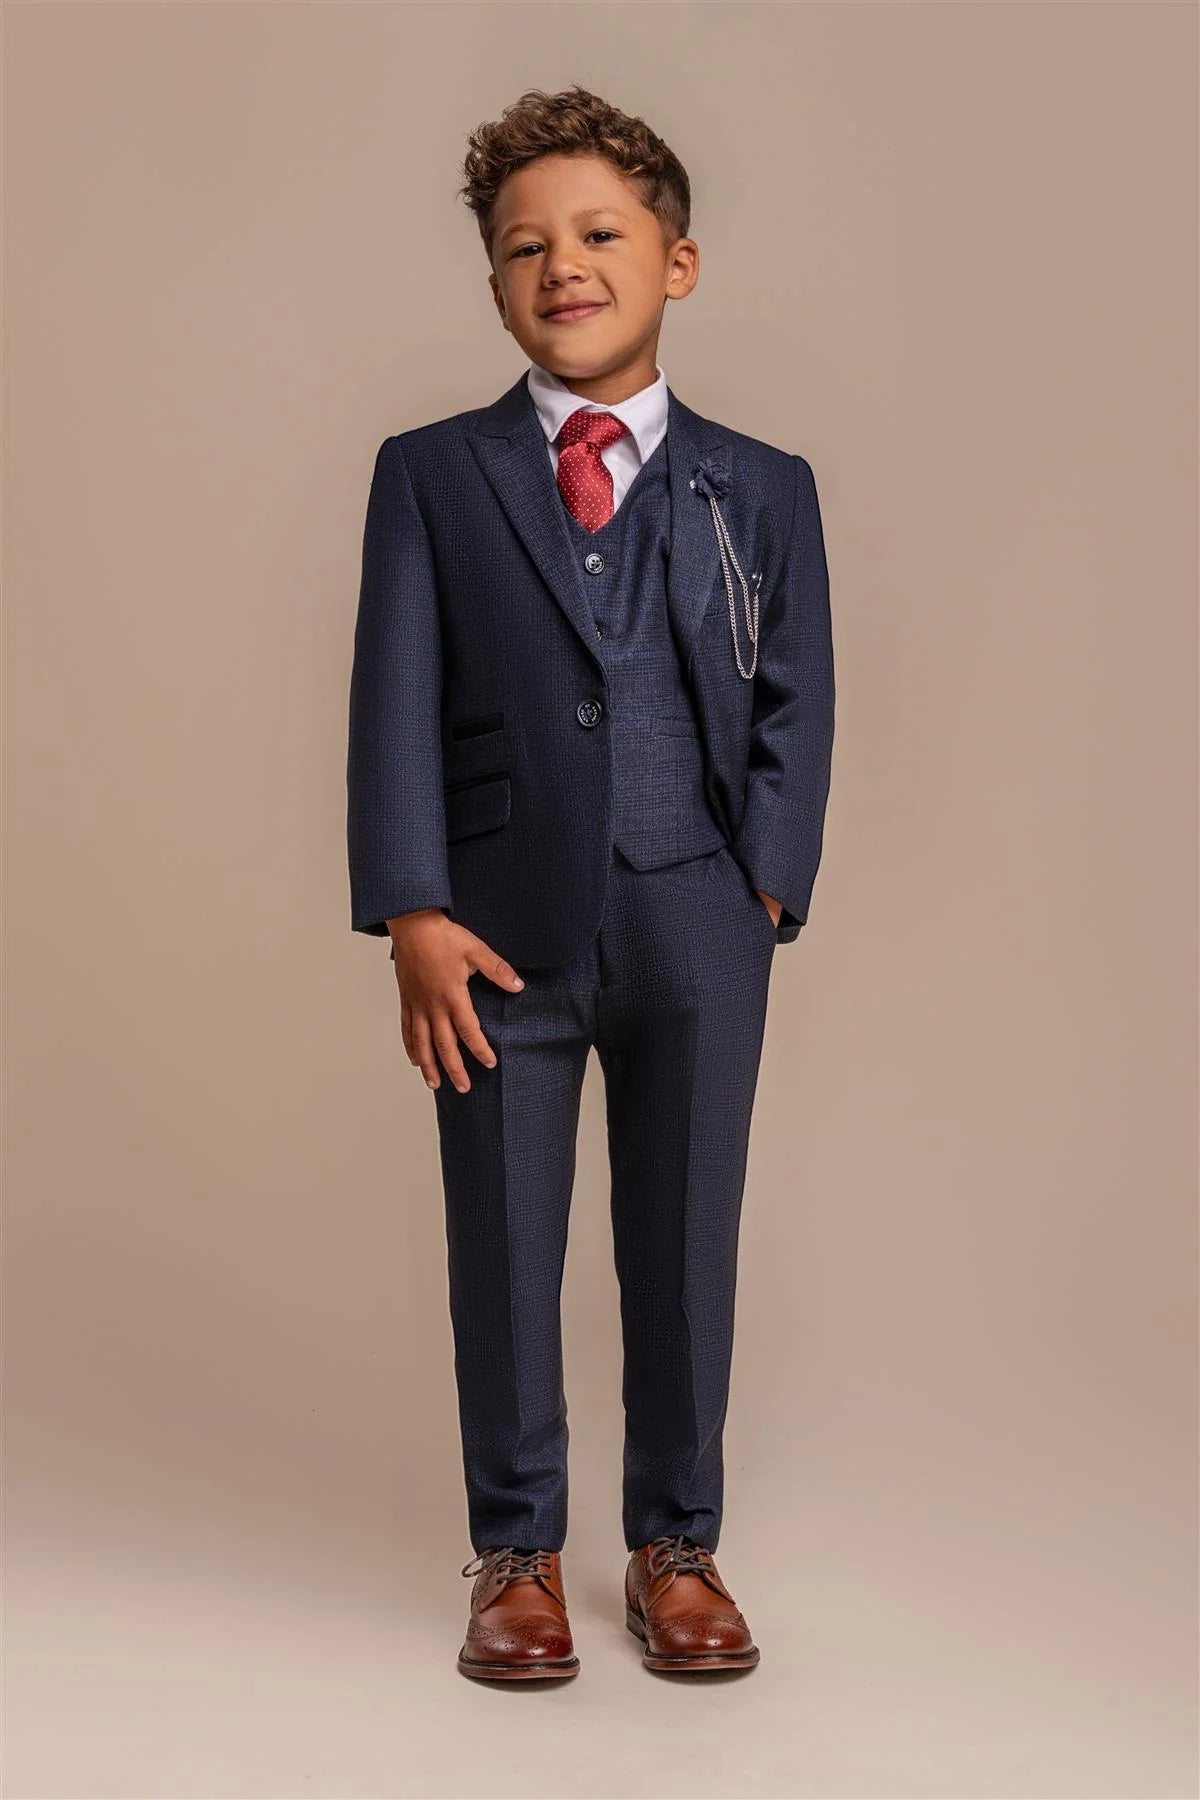 Caridi - Boys 3 Piece Navy Check Tweed Suit